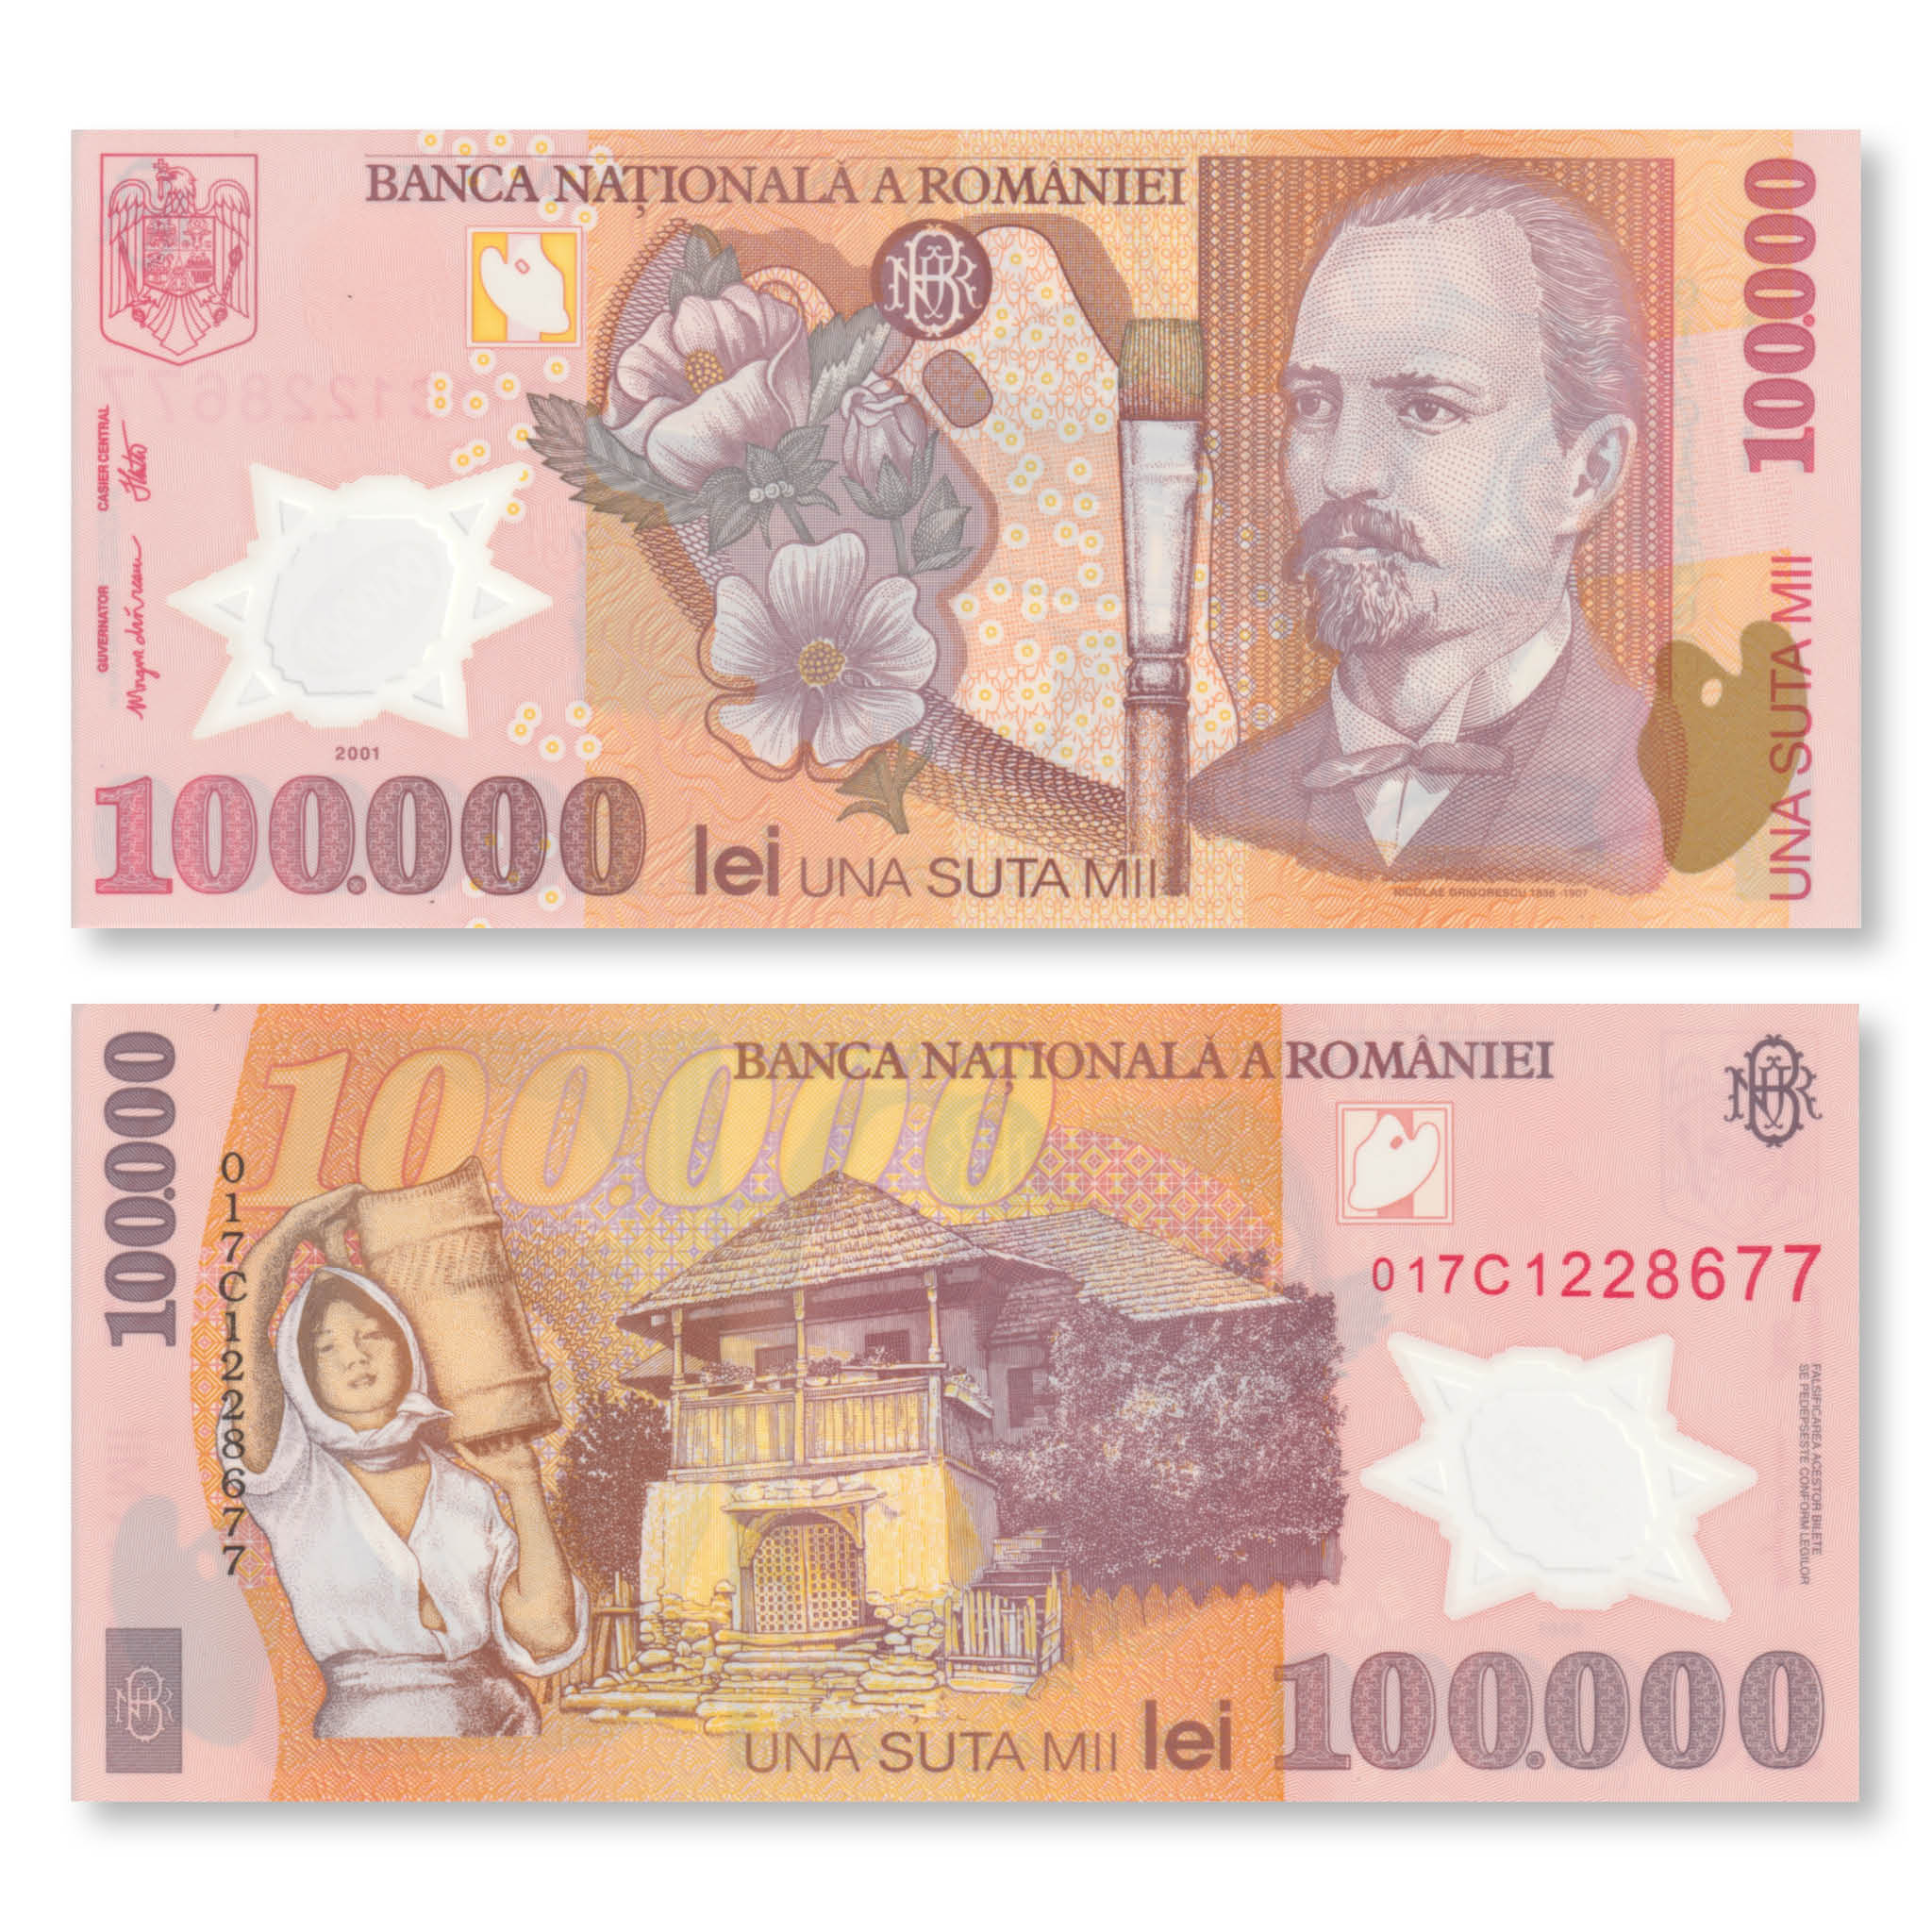 Romania 100000 Lei, 2001/(20)04, B275d, P114a, UNC - Robert's World Money - World Banknotes